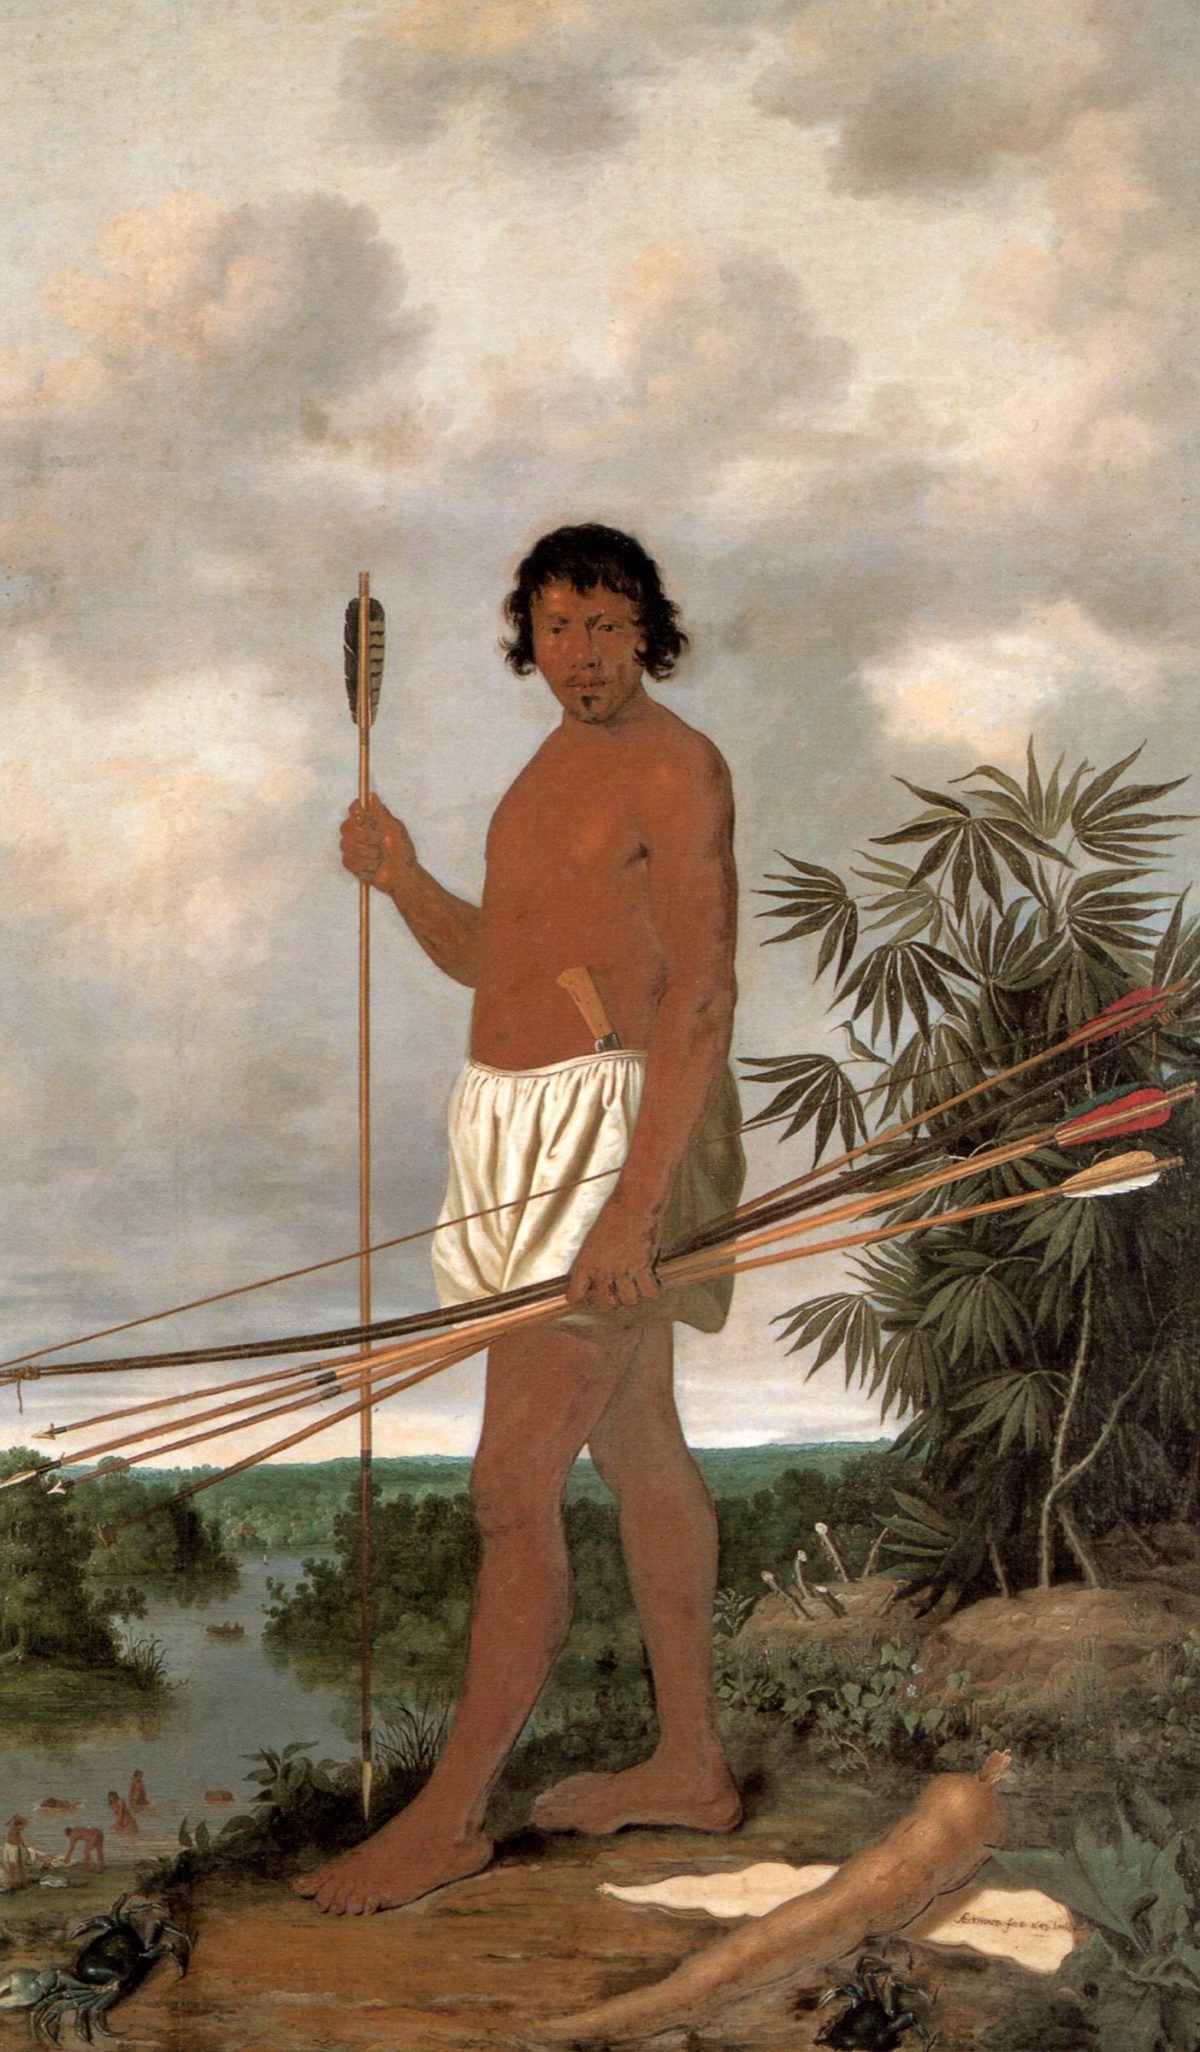 Guarani culture / traditions  Mitologia guarani, Mitologia, Mitologia  indigena